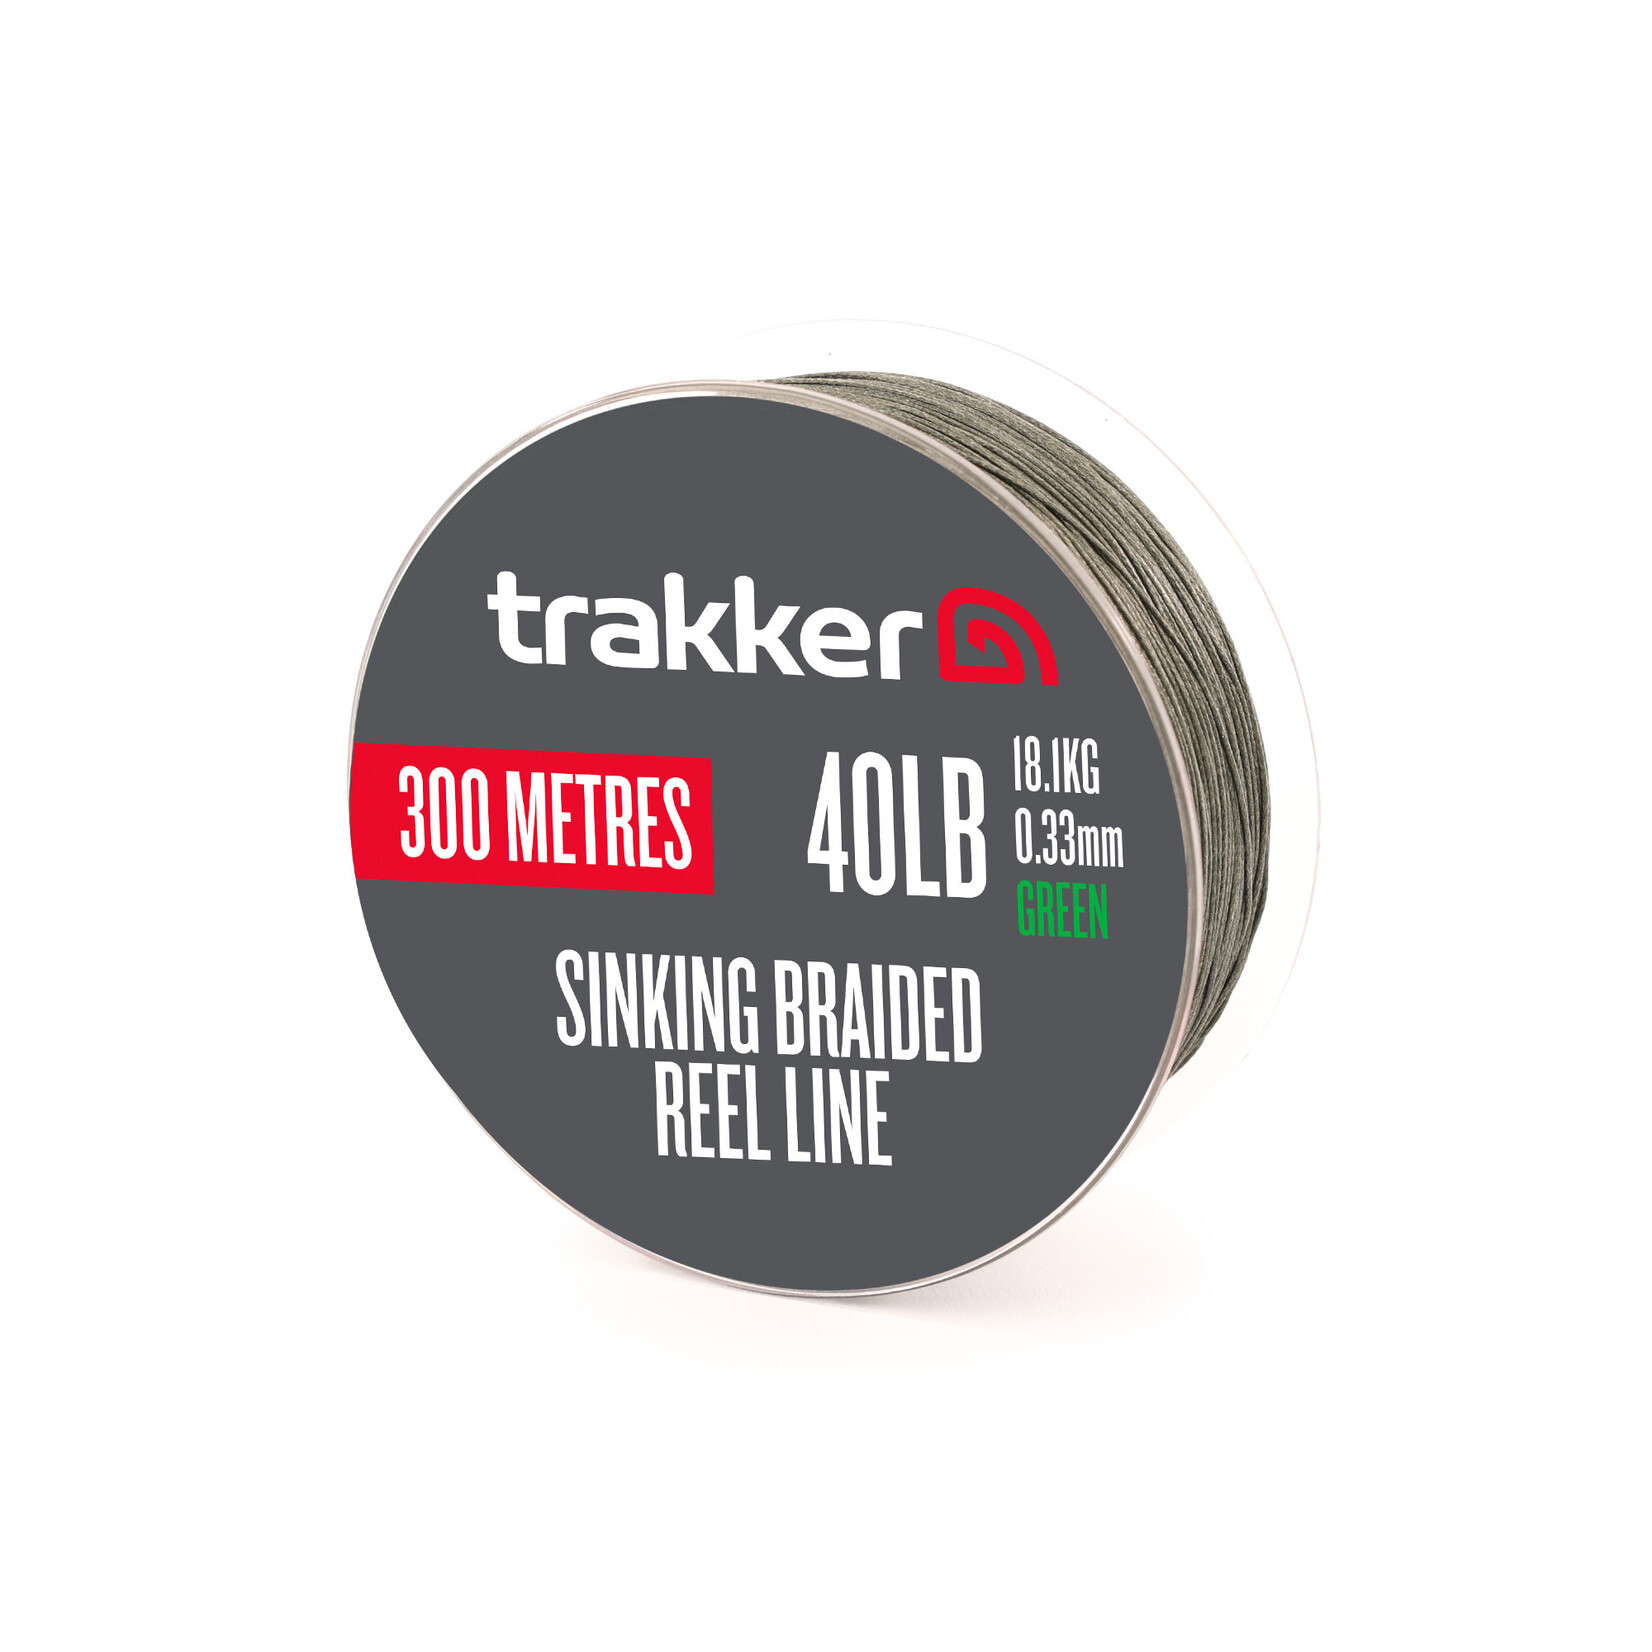 TRAKKER Trakker Sinking Braided Reel Line 300M 40 LB 18.1KG / 0.33MM